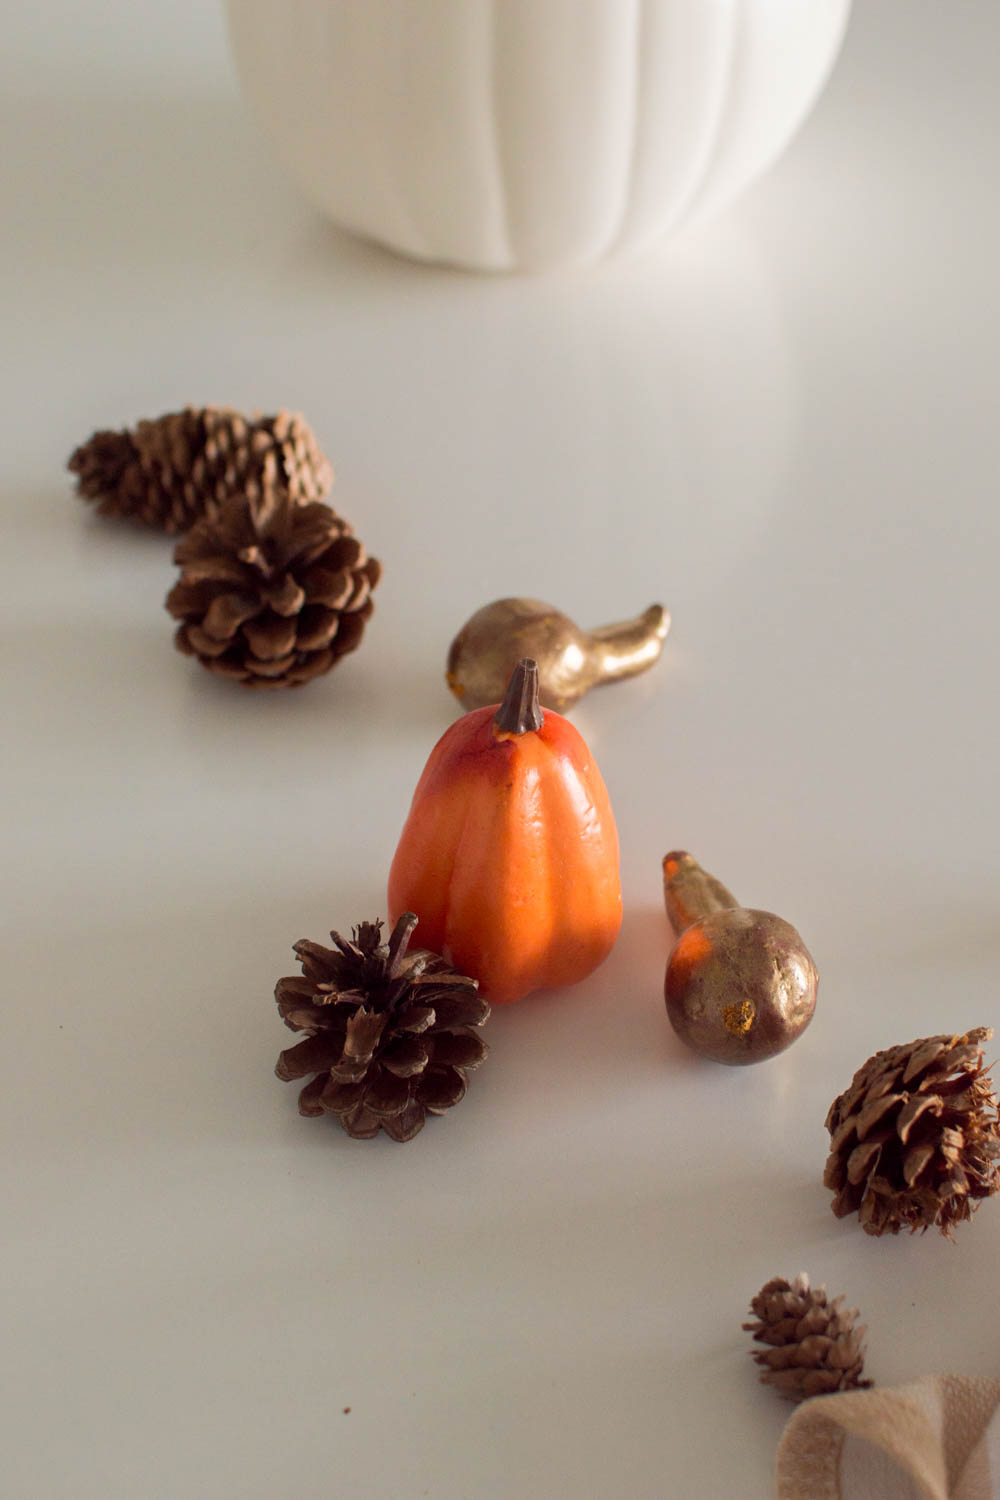 Miniature plastic gourds, pumpkins and pinecones